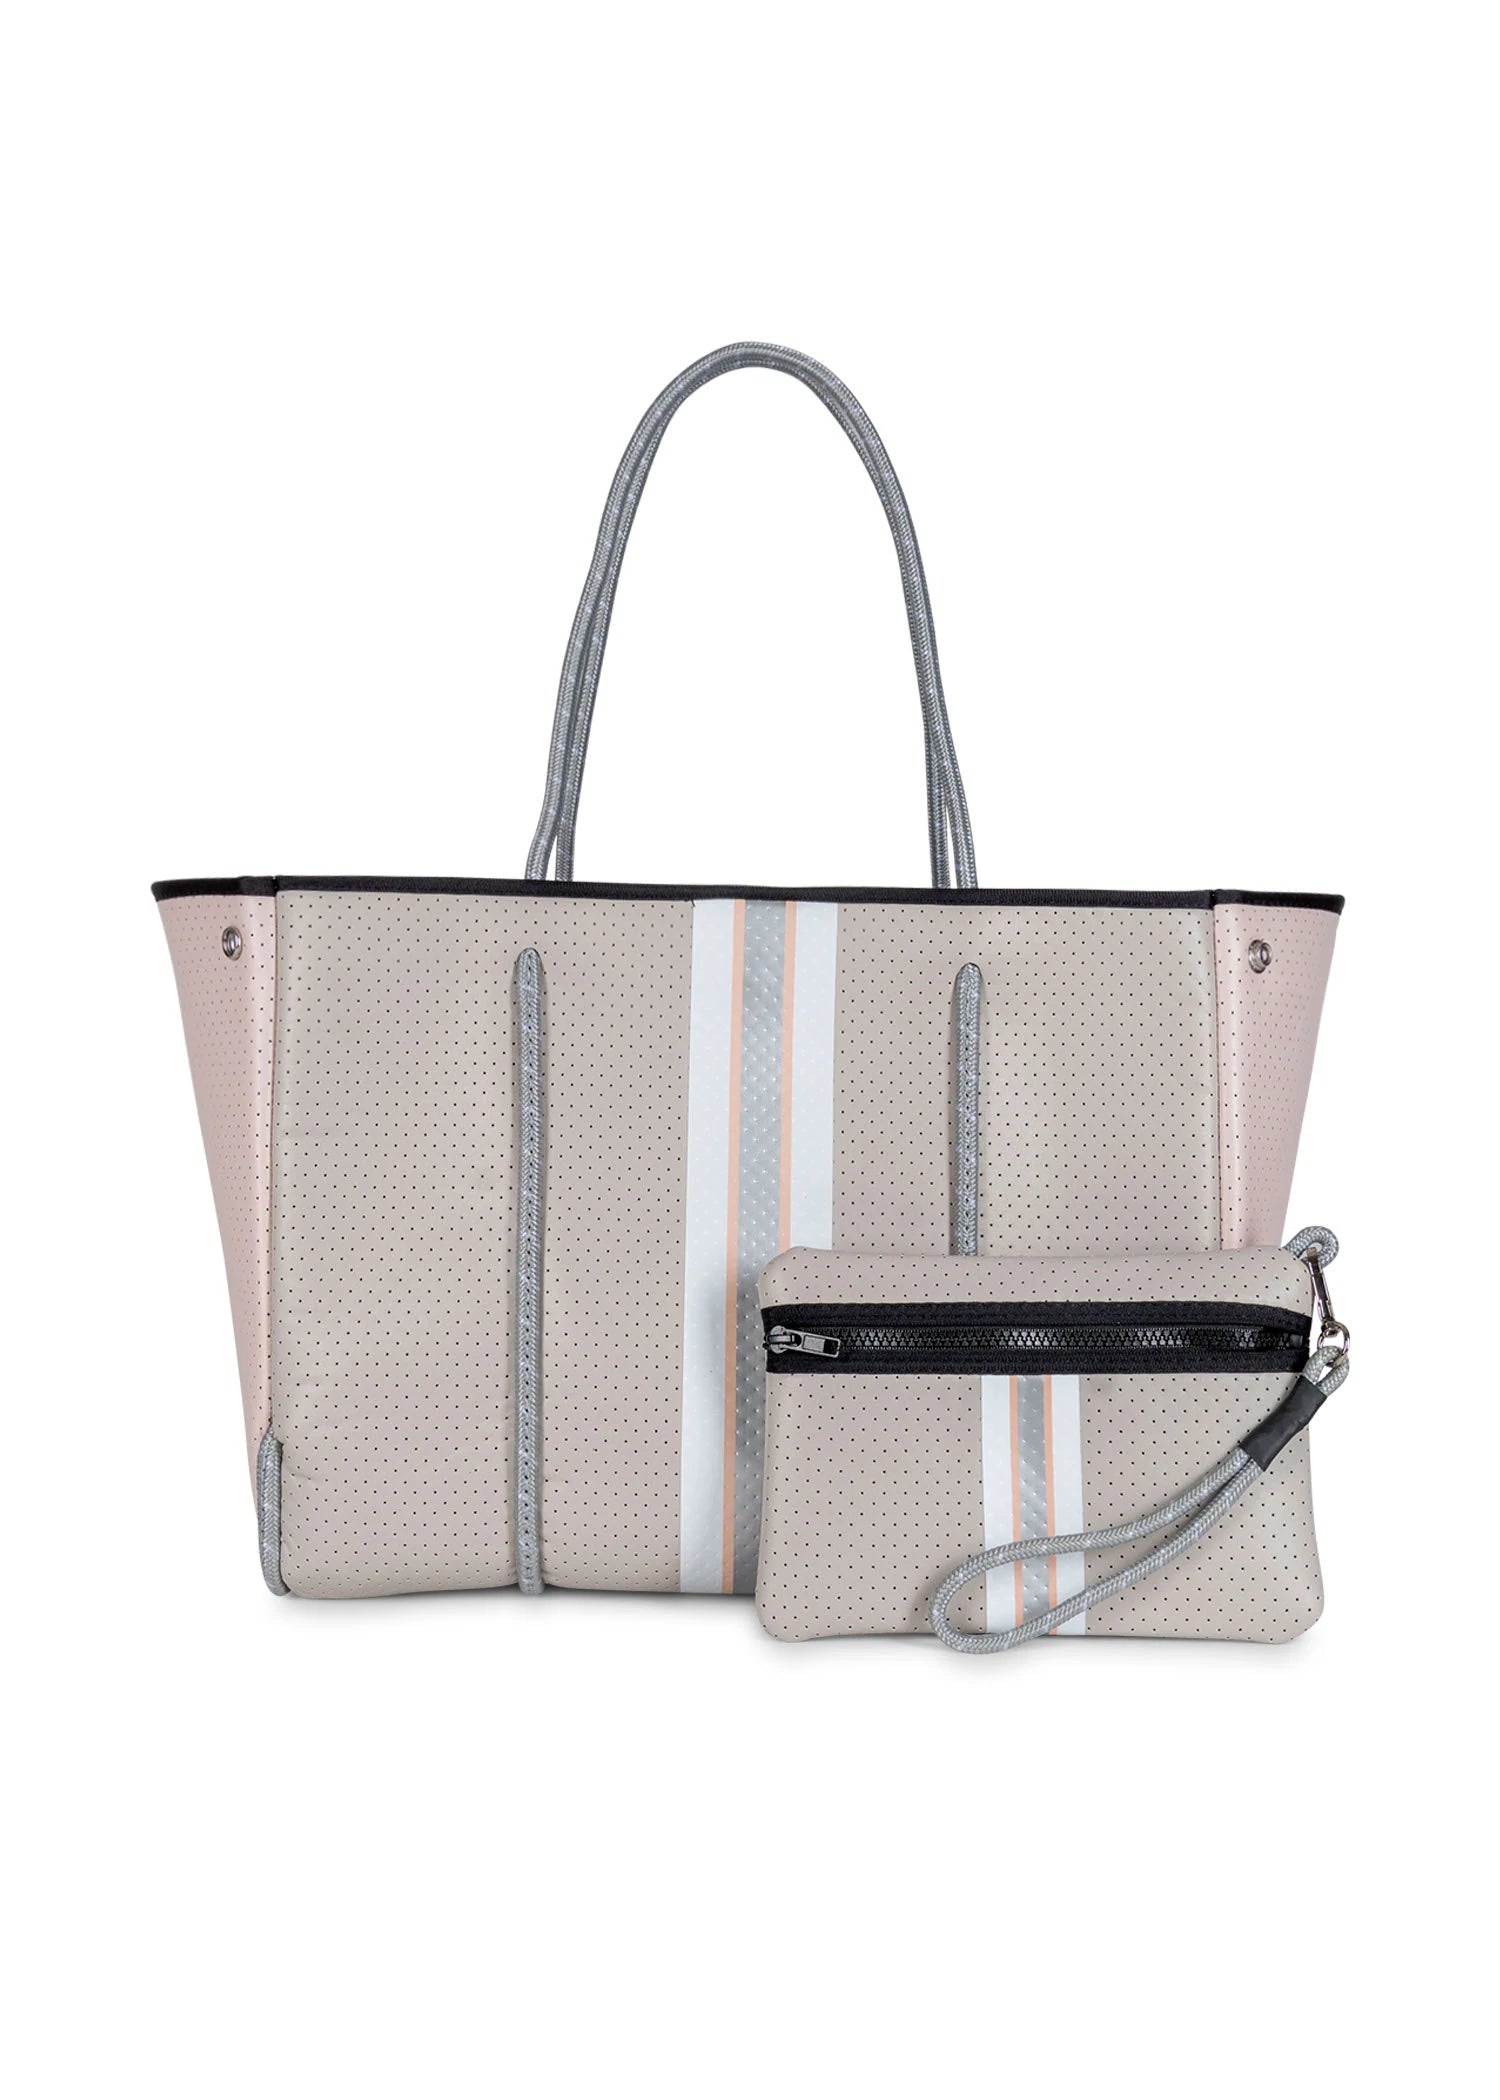 HgOgTg Designer handbags,Single shoulder slope woven bag bag, large  capacity shell package grass